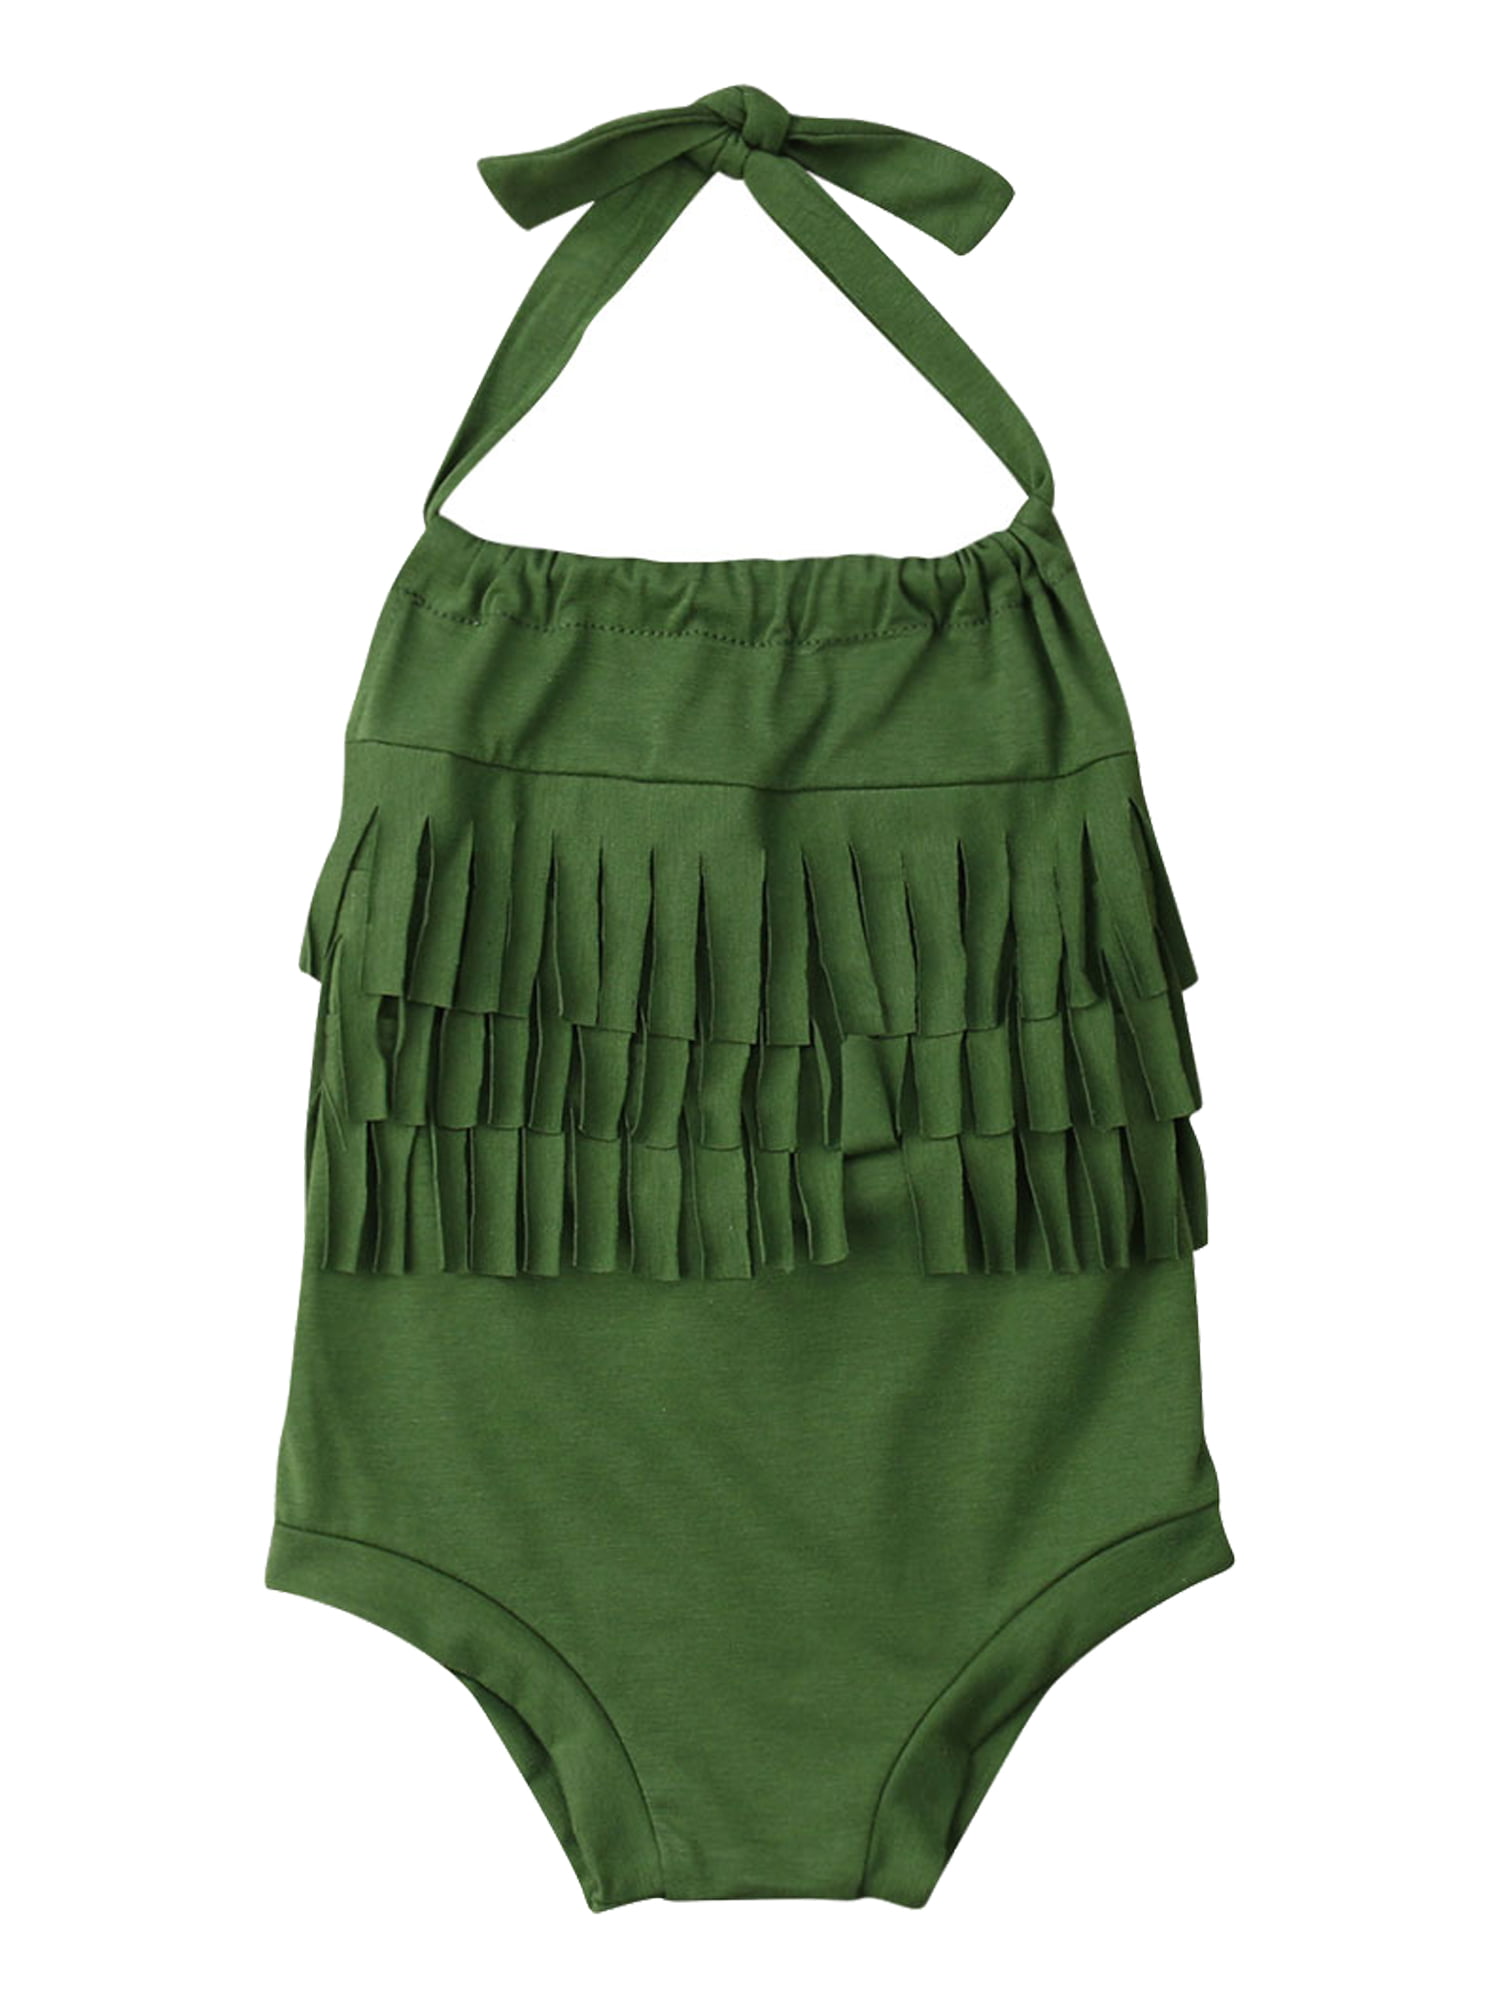 Nokpsedcb Newborn Baby Girl Clothes Tassel Halter Romper Bodysuit Jumpsuit  Cloithes Outfit Green 6-12 Months